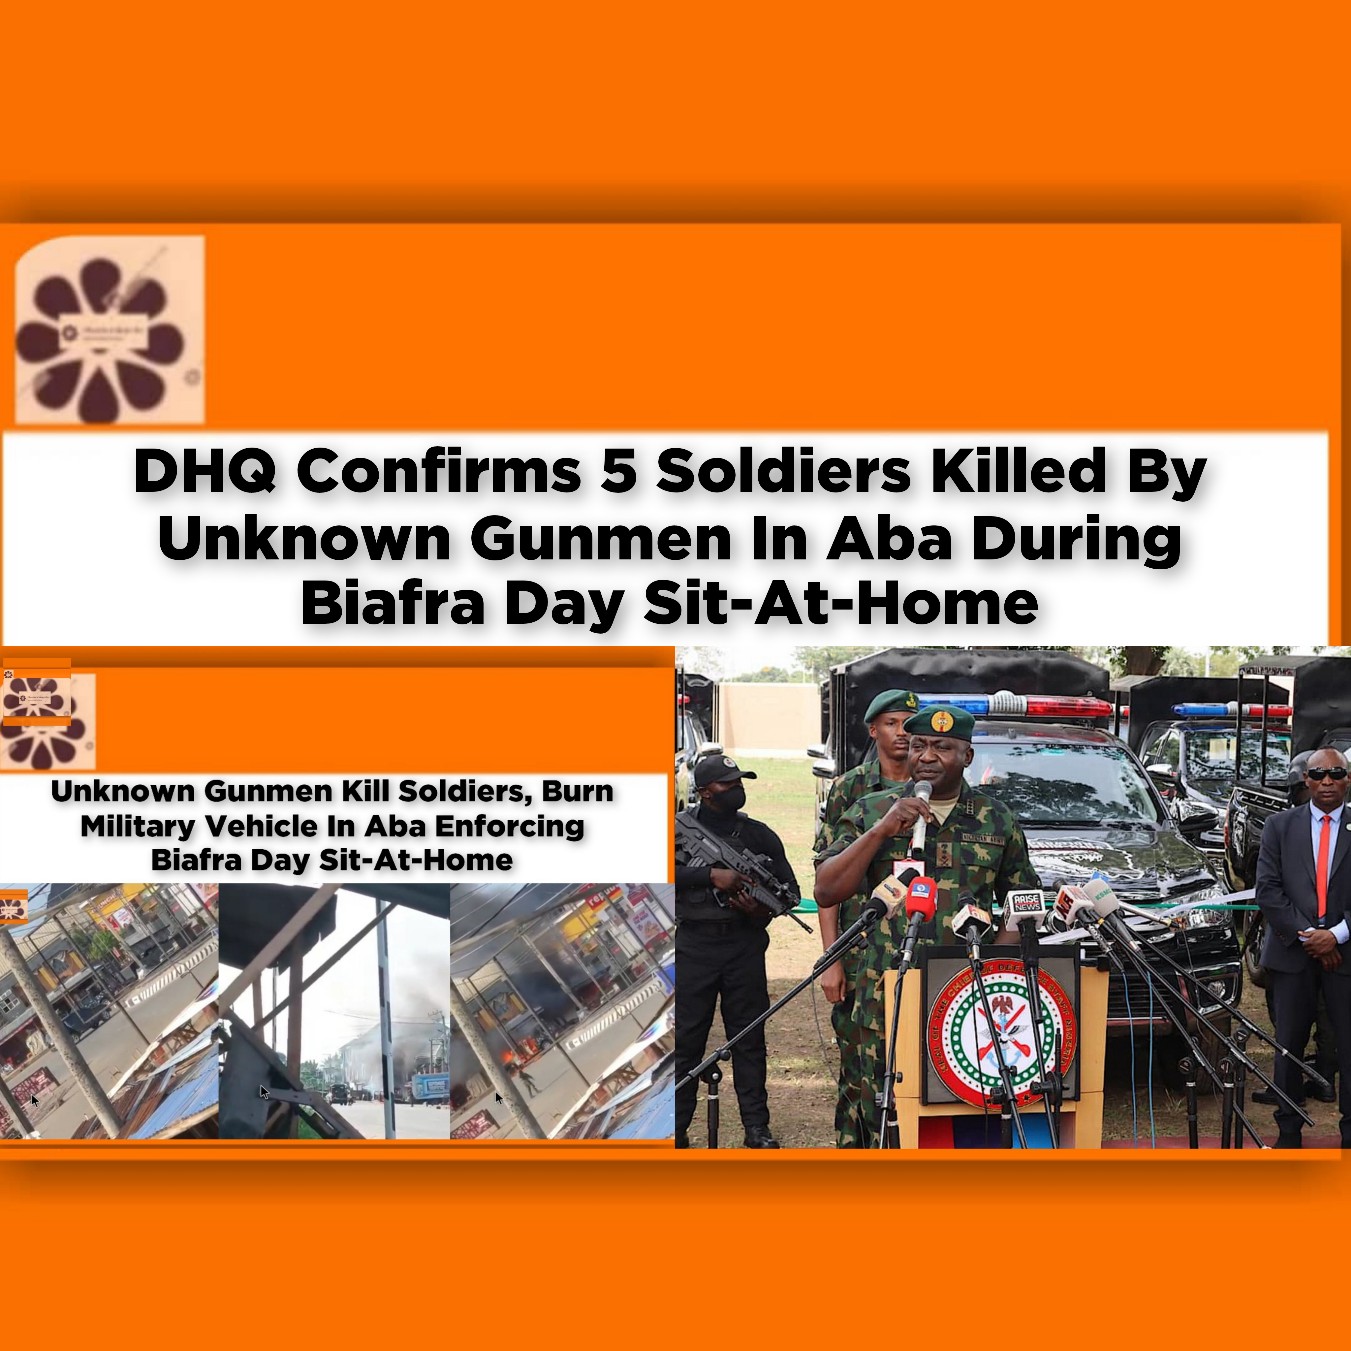 DHQ Confirms 5 Soldiers Killed By Unknown Gunmen In Aba During Biafra Day Sit-At-Home ~ OsazuwaAkonedo #Aba #Abubakar #Atiku #Biafra #DHQ #ESN #Gunmen #Hope #ipob #Kanu #military #Nigeria #Nnamdi #Obiakabia #soldiers #Unknown #Uzodimma